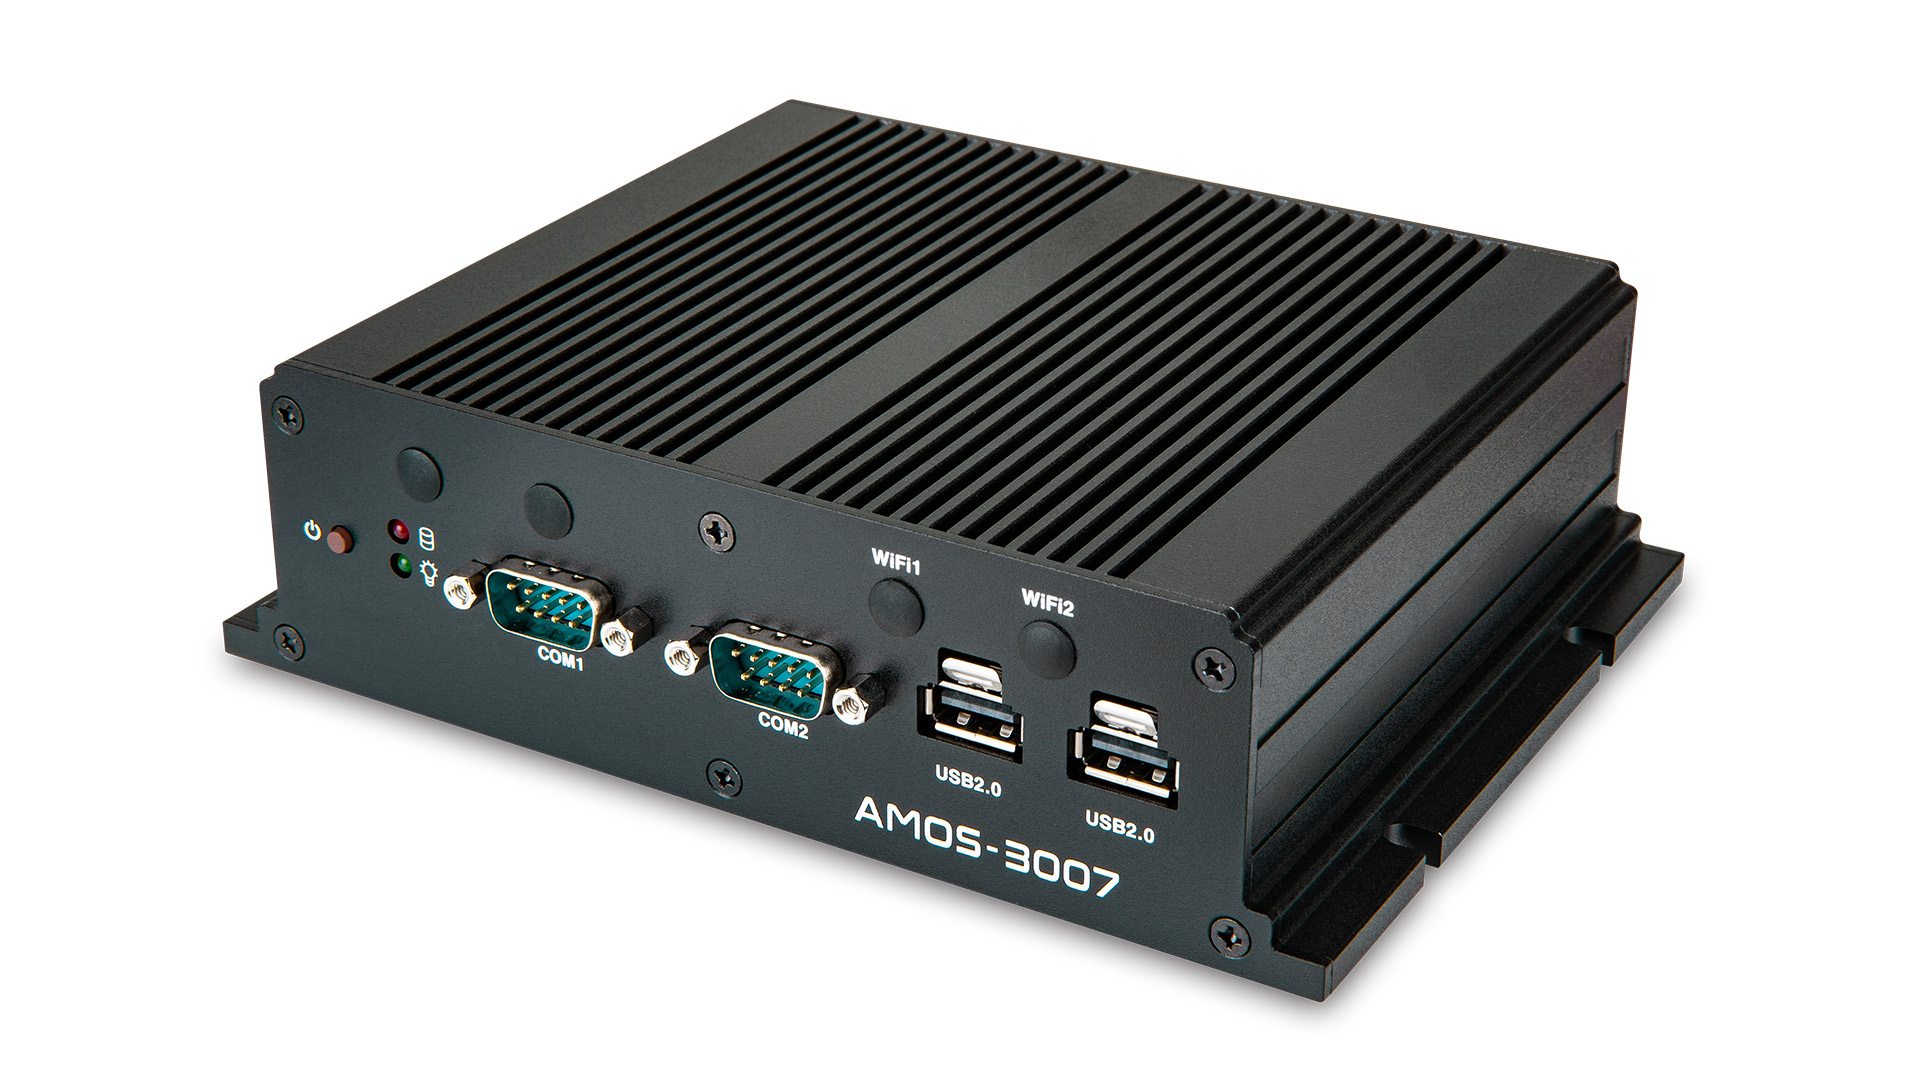 VIA AMOS-3007 intelligent edge system